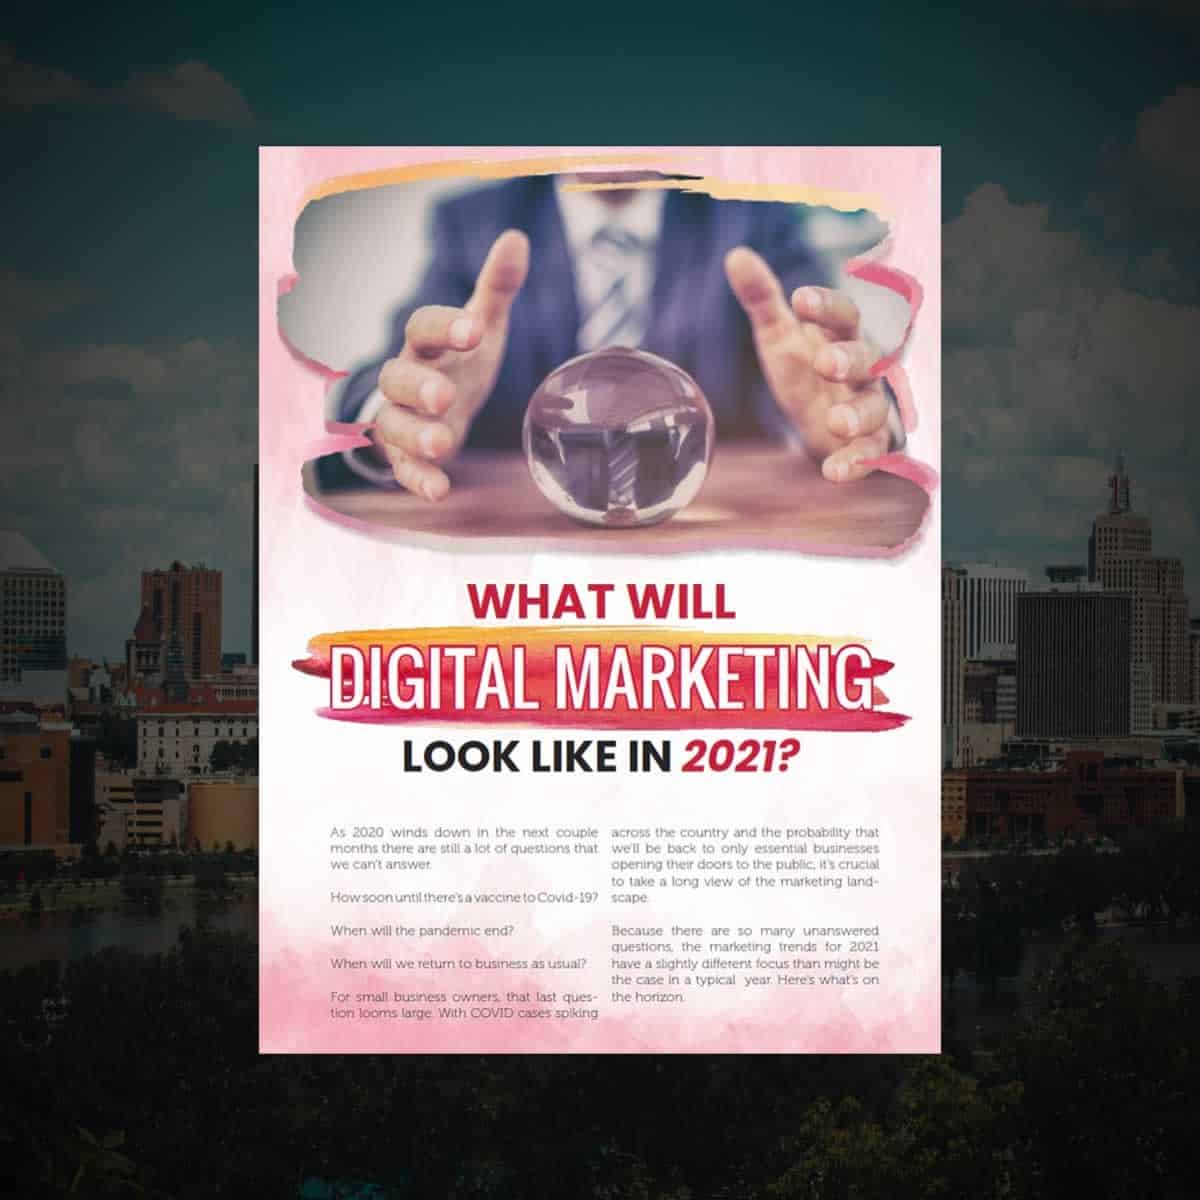 Digital Marketing in 2021